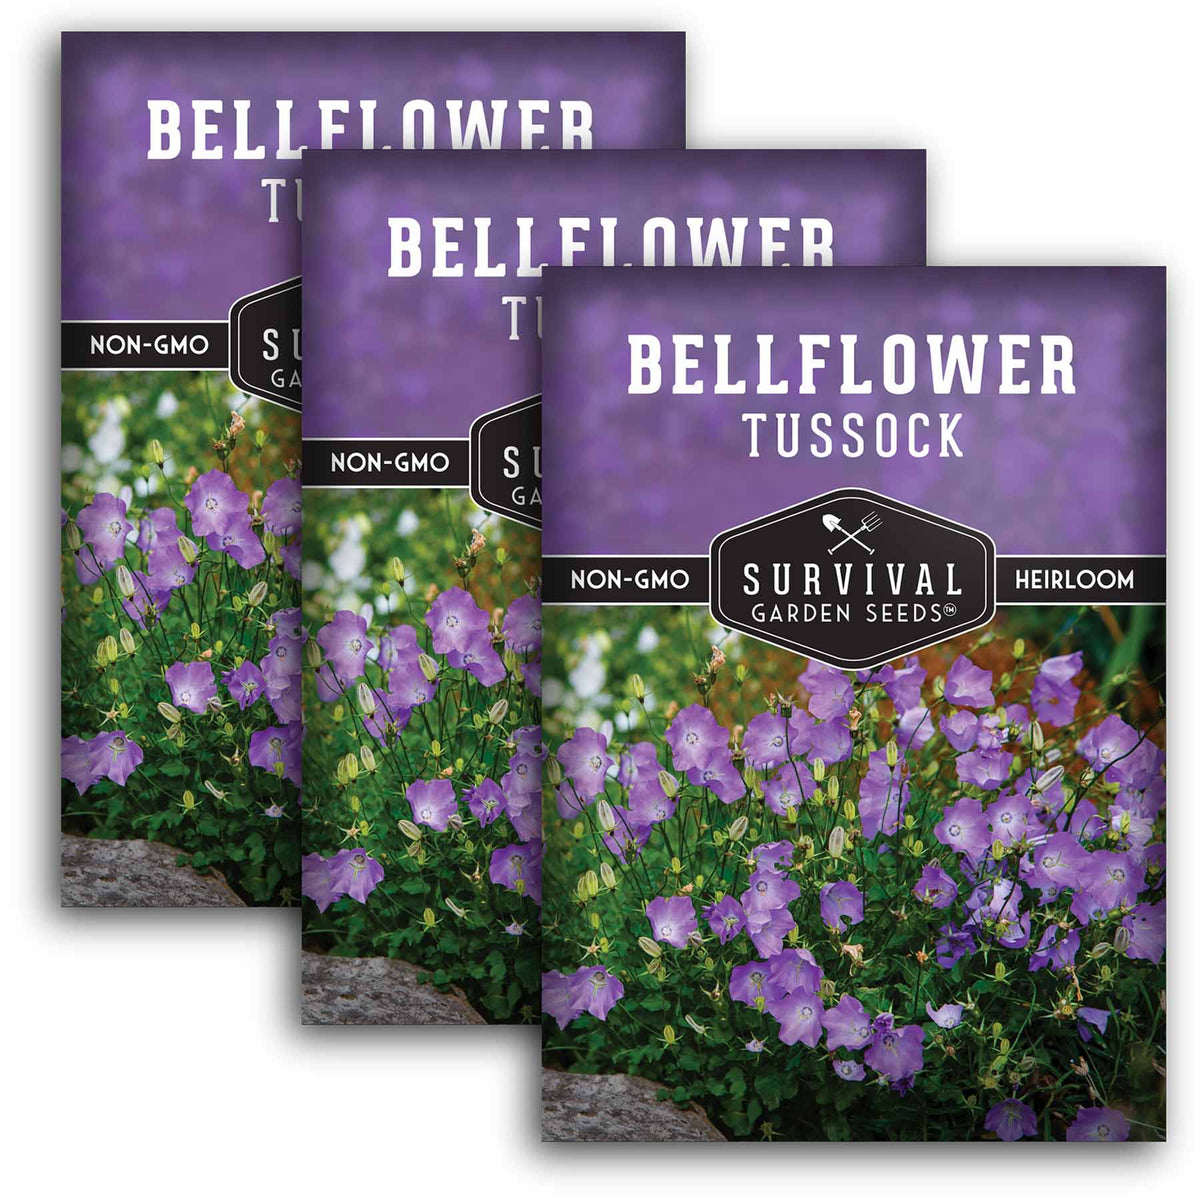 3 packets of Tussock Bellflower seeds